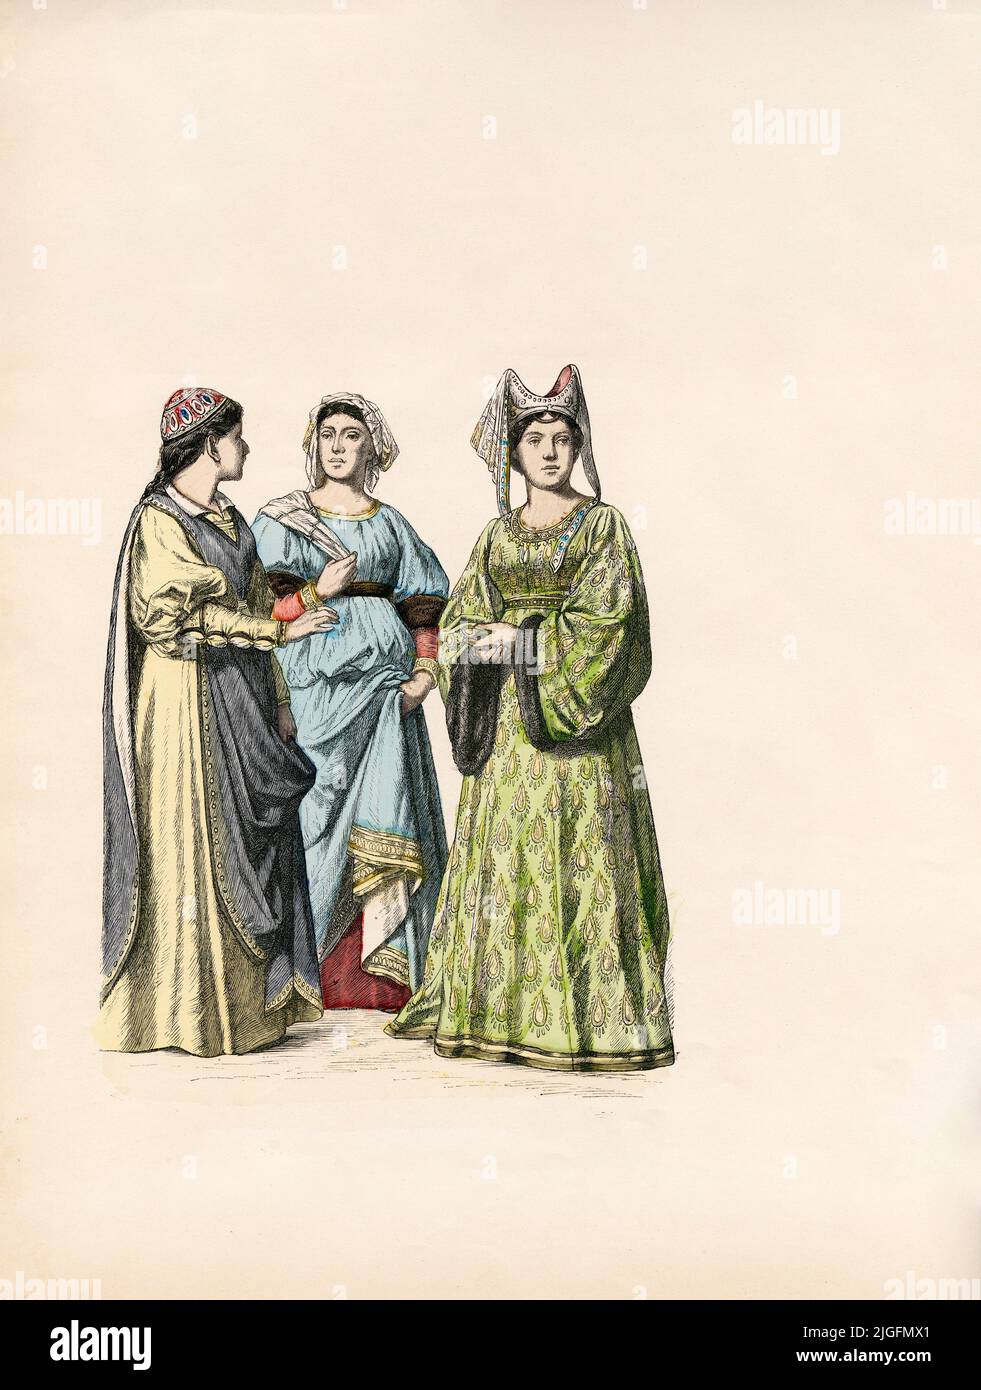 Italian Girl, Noblewoman, Lady of Siena, Italy, Second Half of the 14th Century, Illustration, The History of Costume, Braun & Schneider, Munich, Germany, 1861-1880 Stock Photo